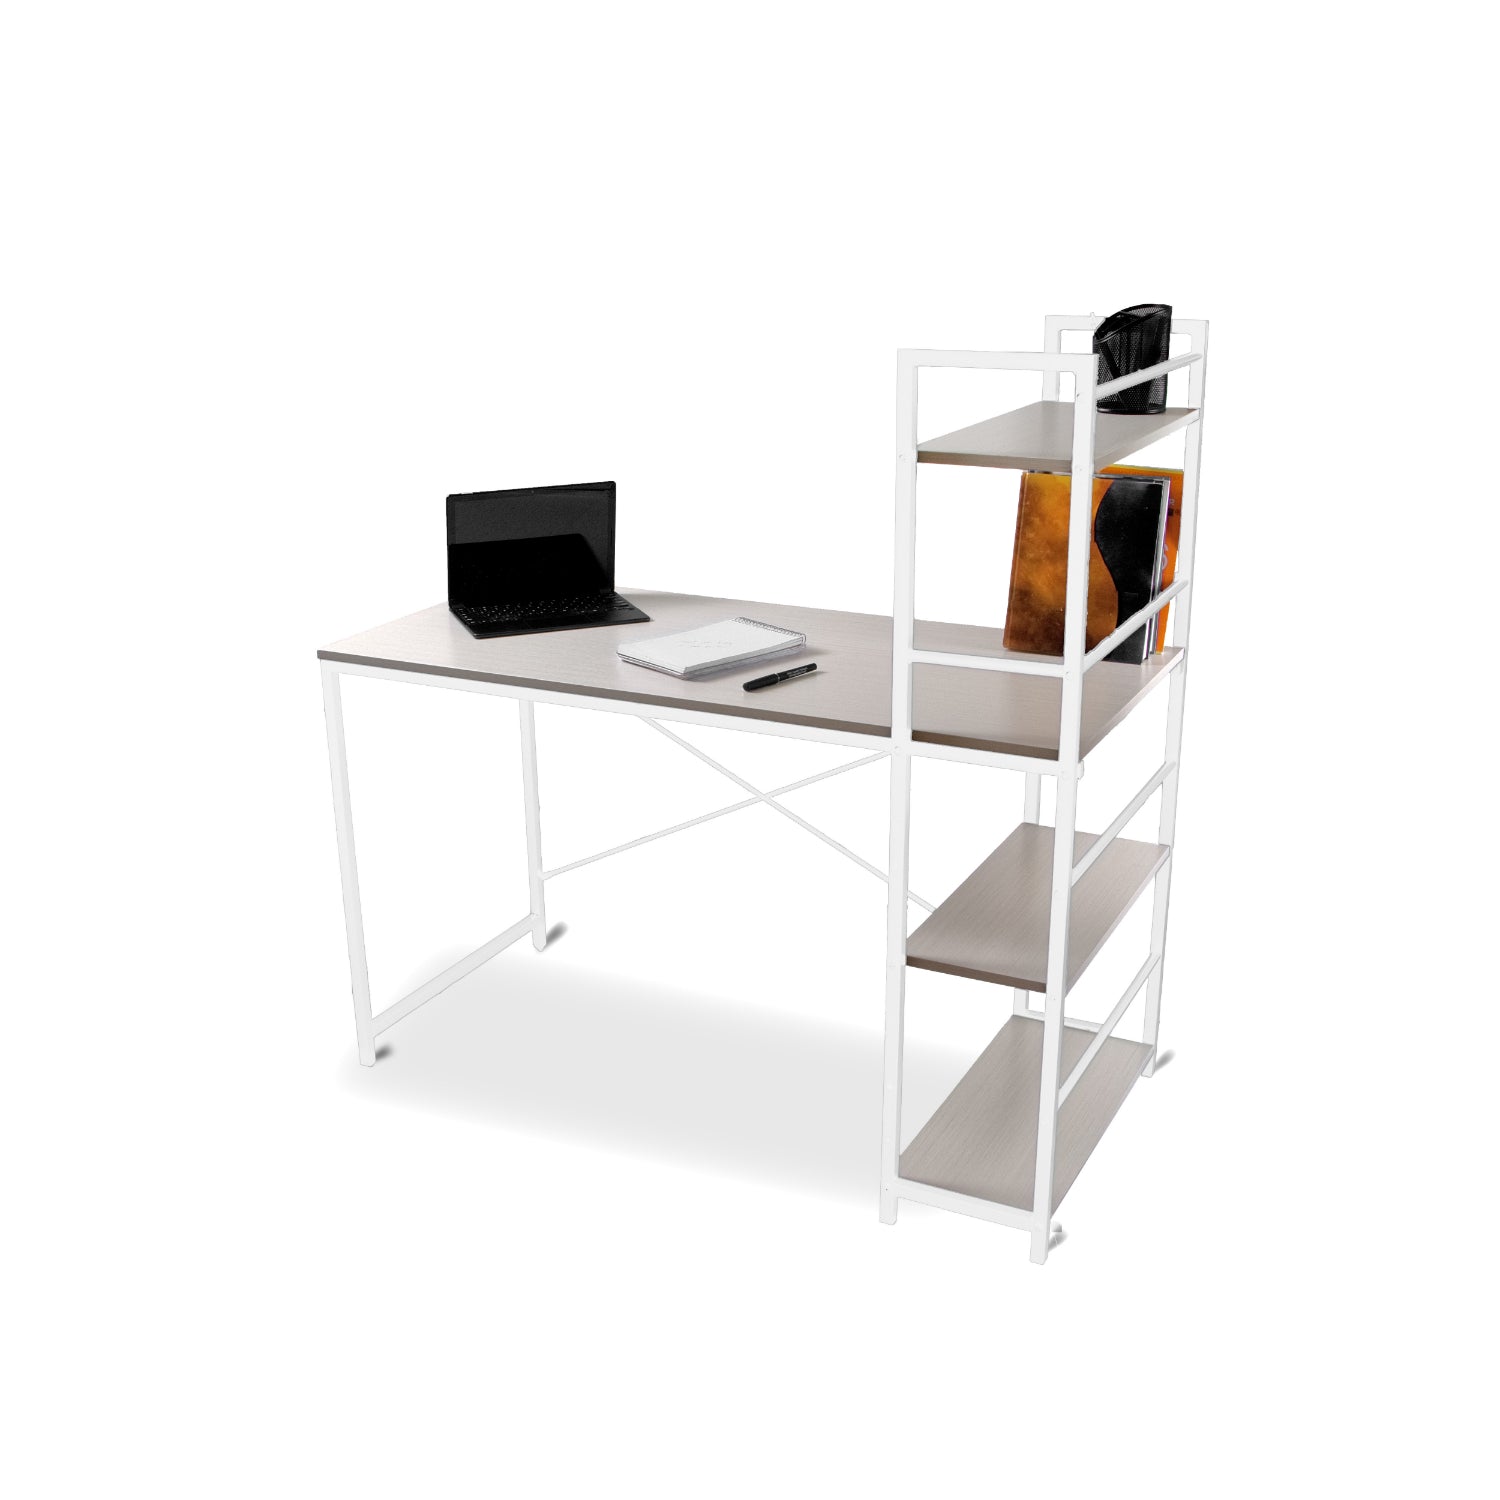 ZfLogic ALTITUDE Shelf Computer Home Office Desk (Crème White)